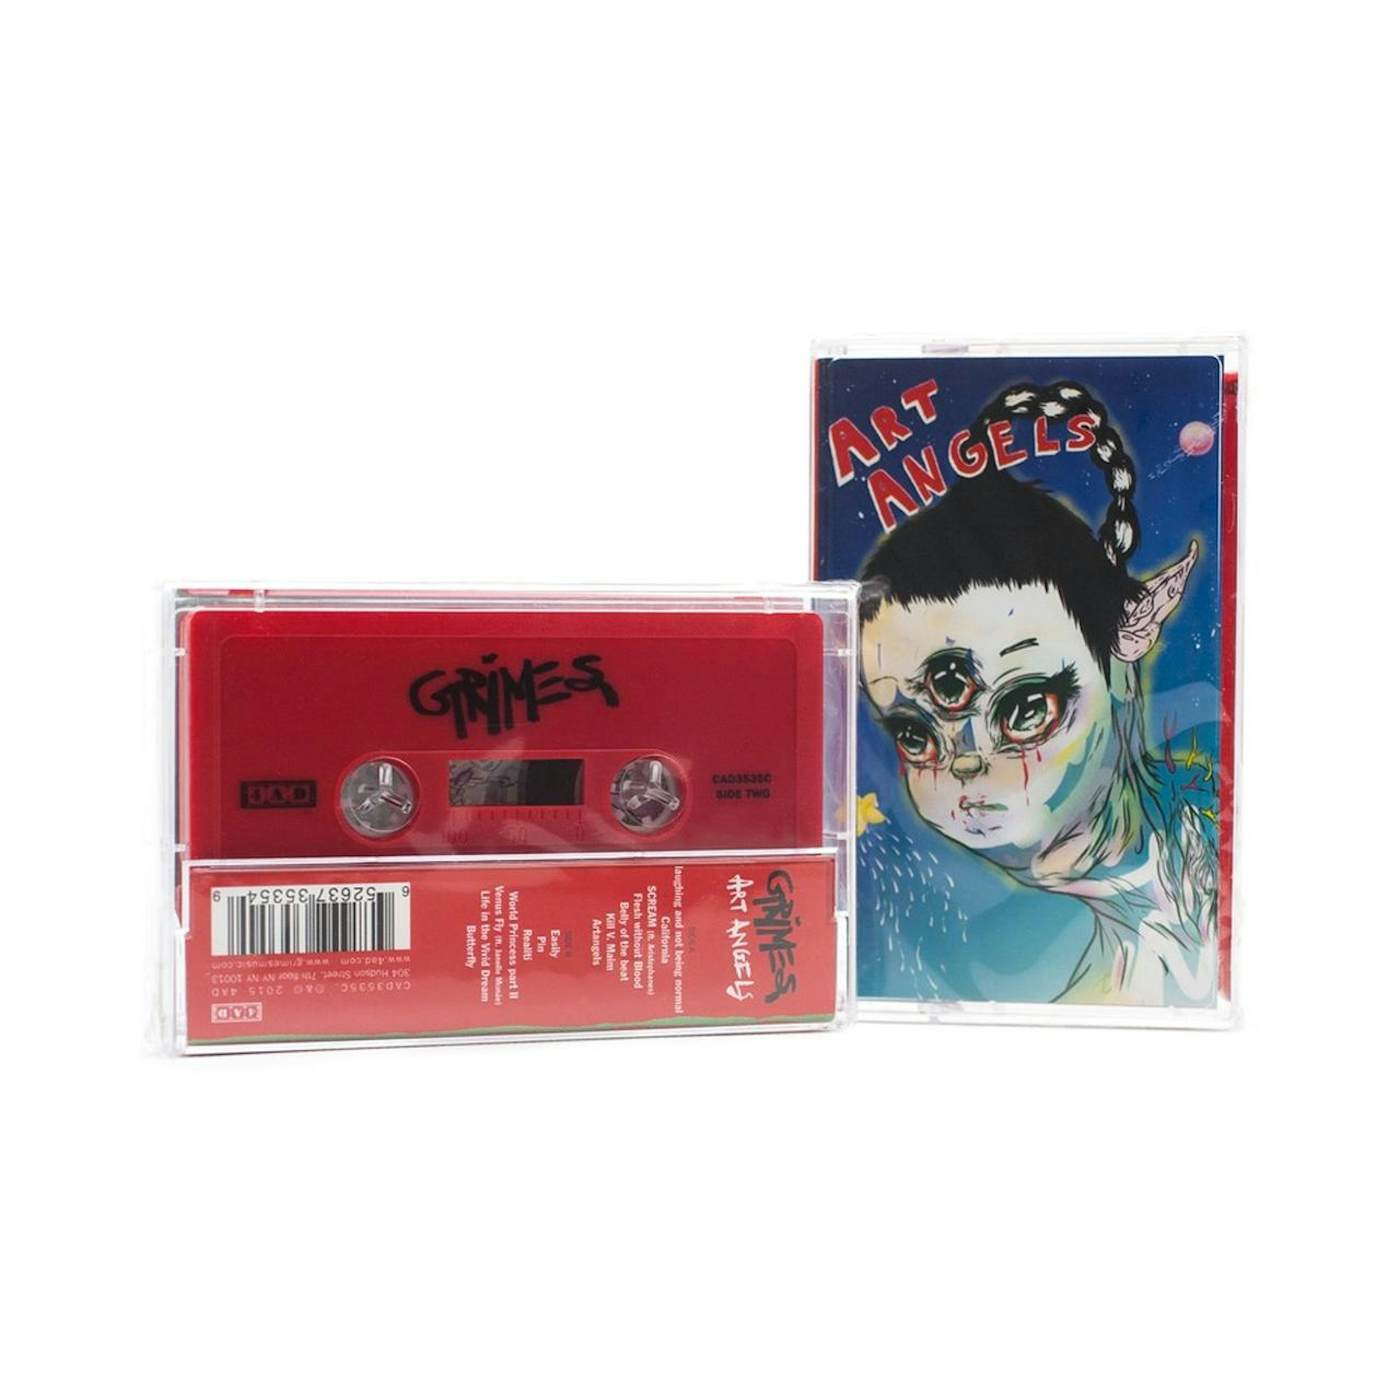 Grimes Art Angels Cassette